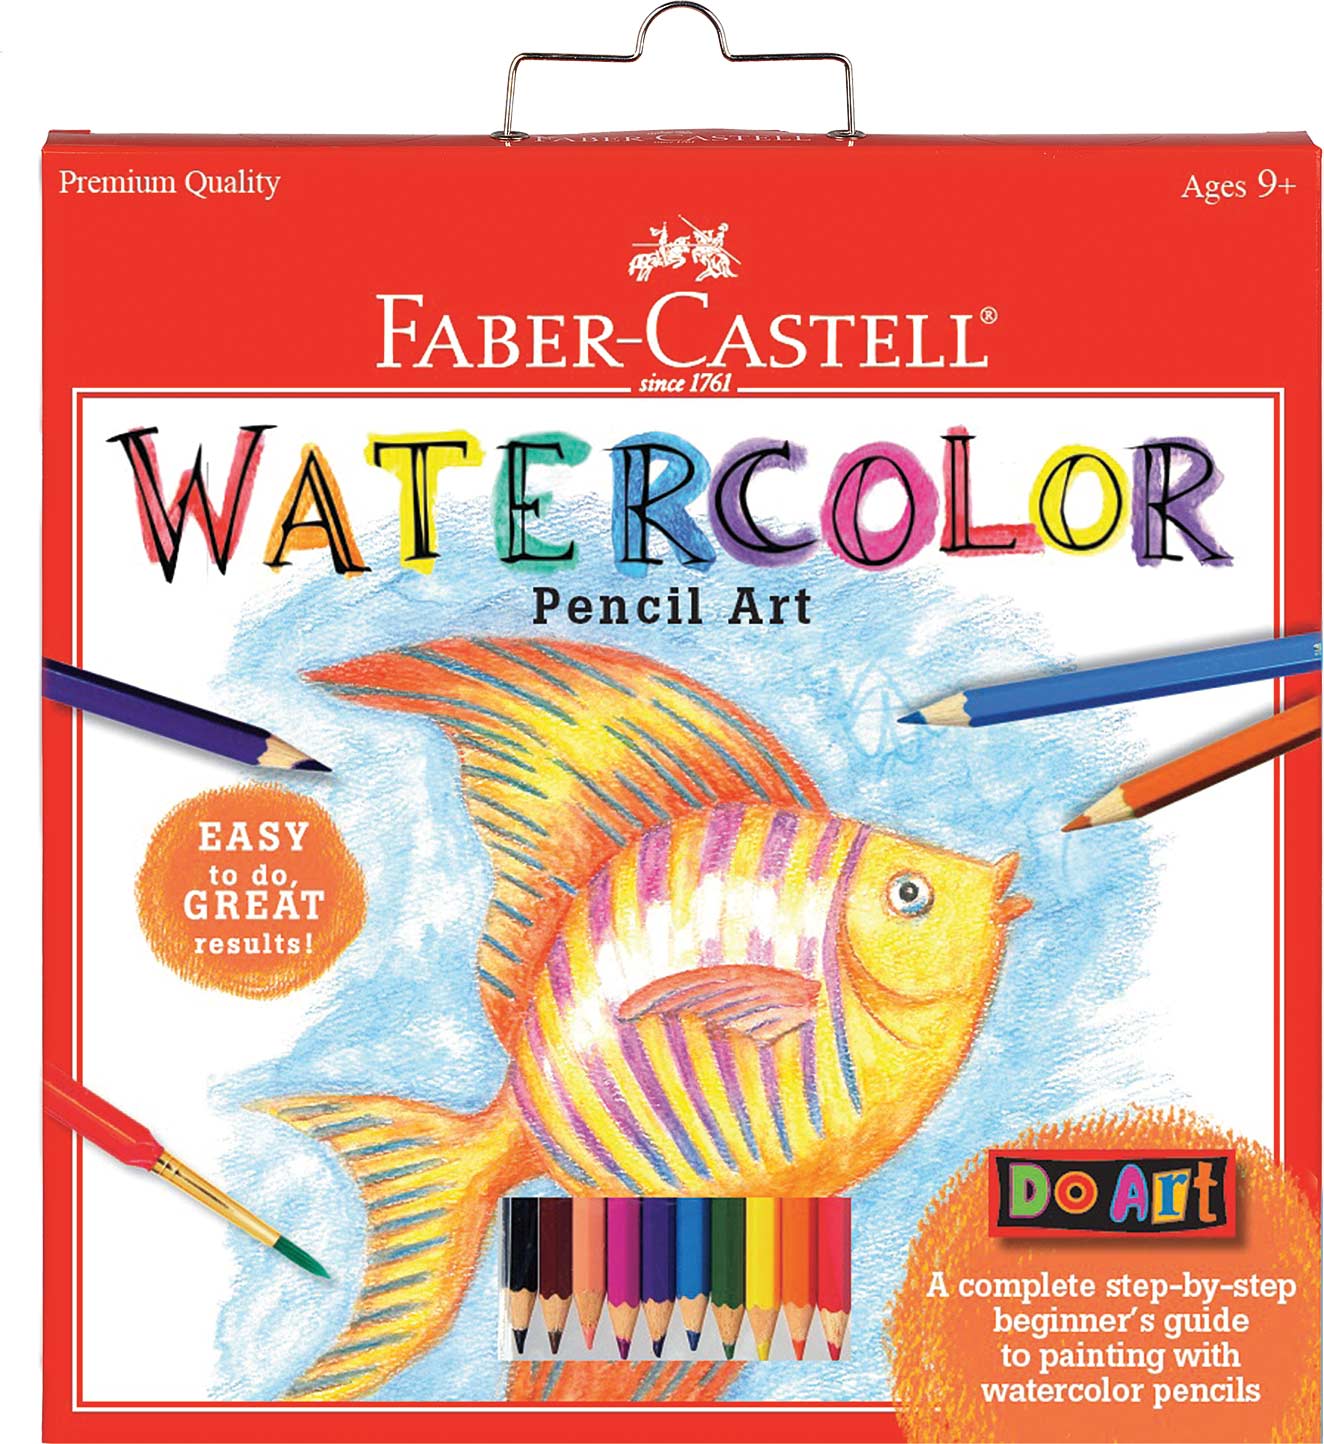 Do Art Watercolor Pencils